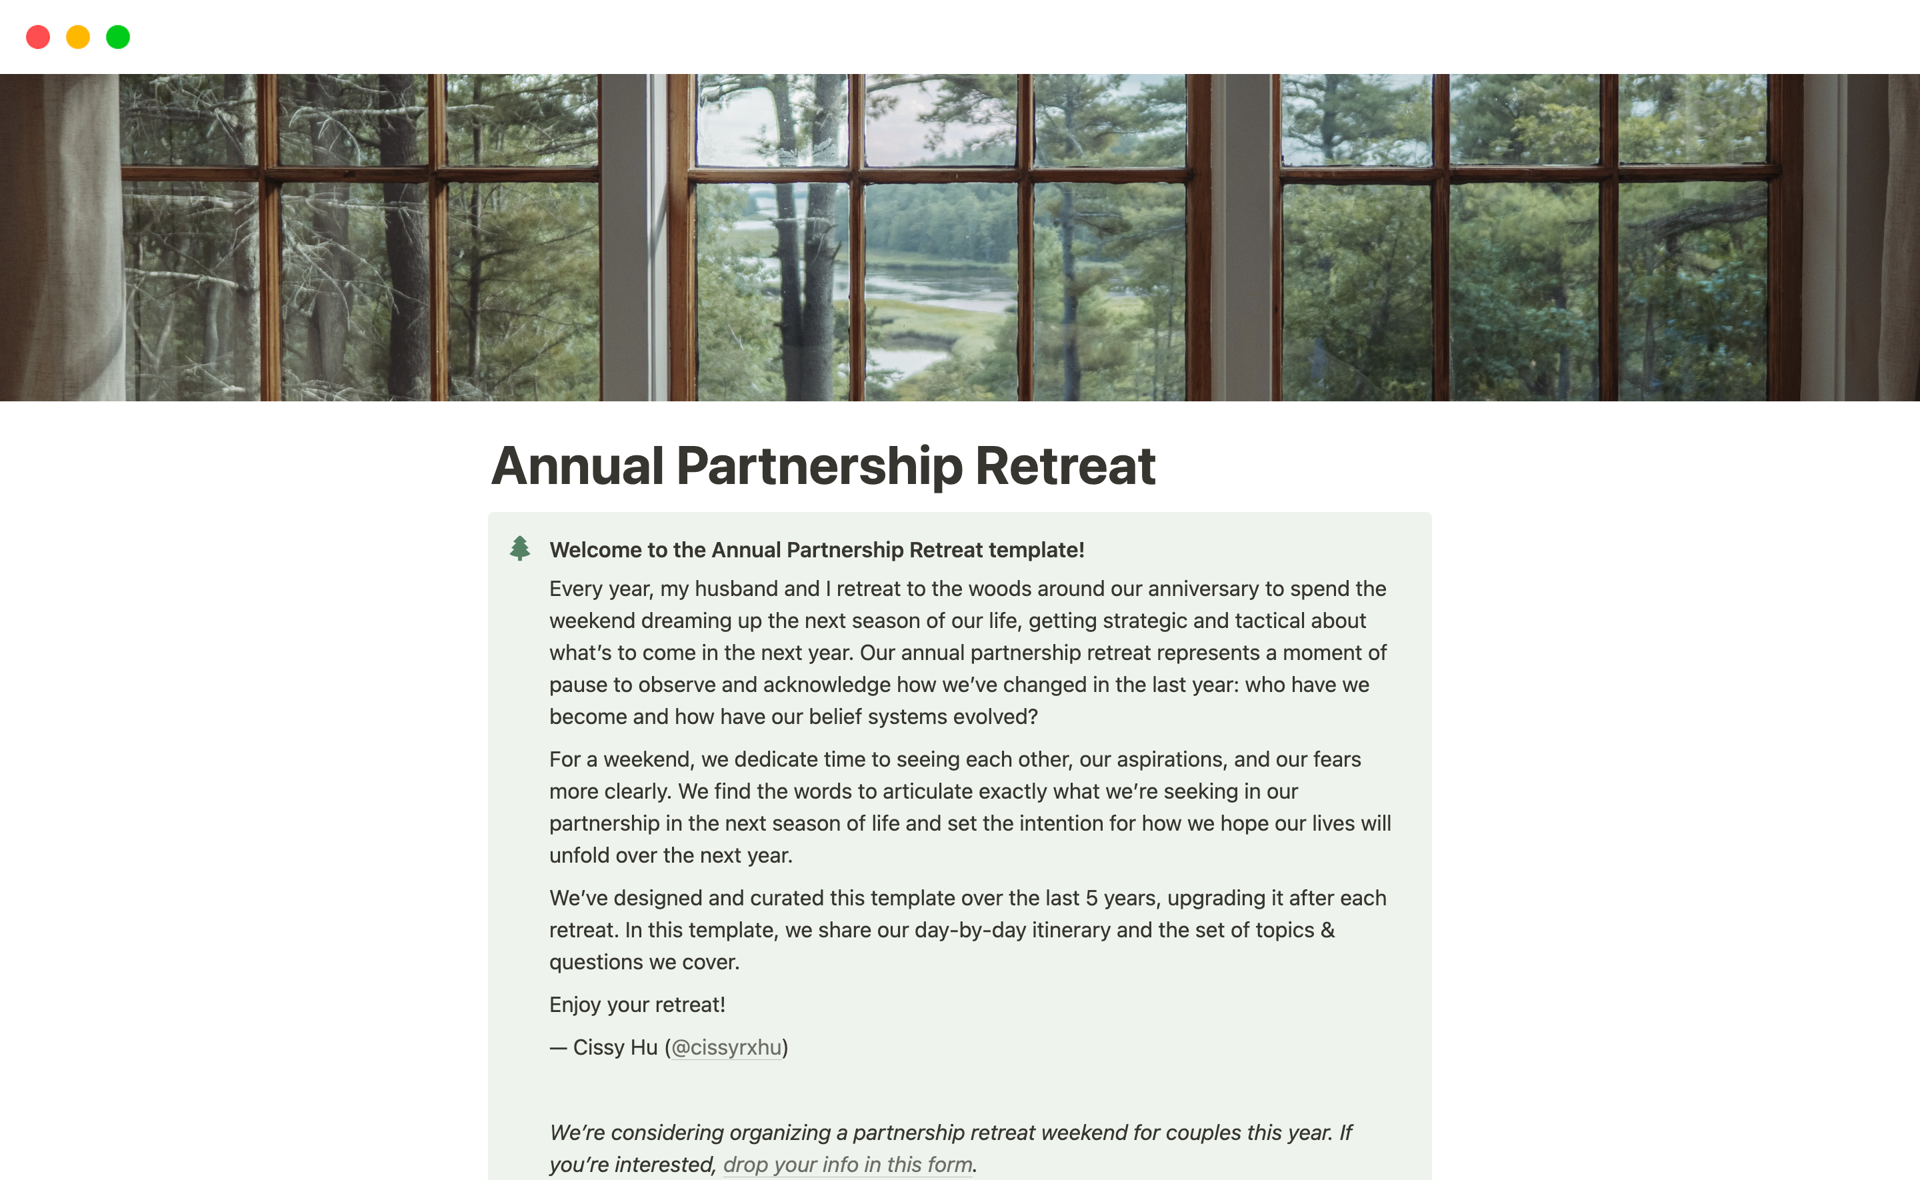 Aperçu du modèle de Partnership Retreat